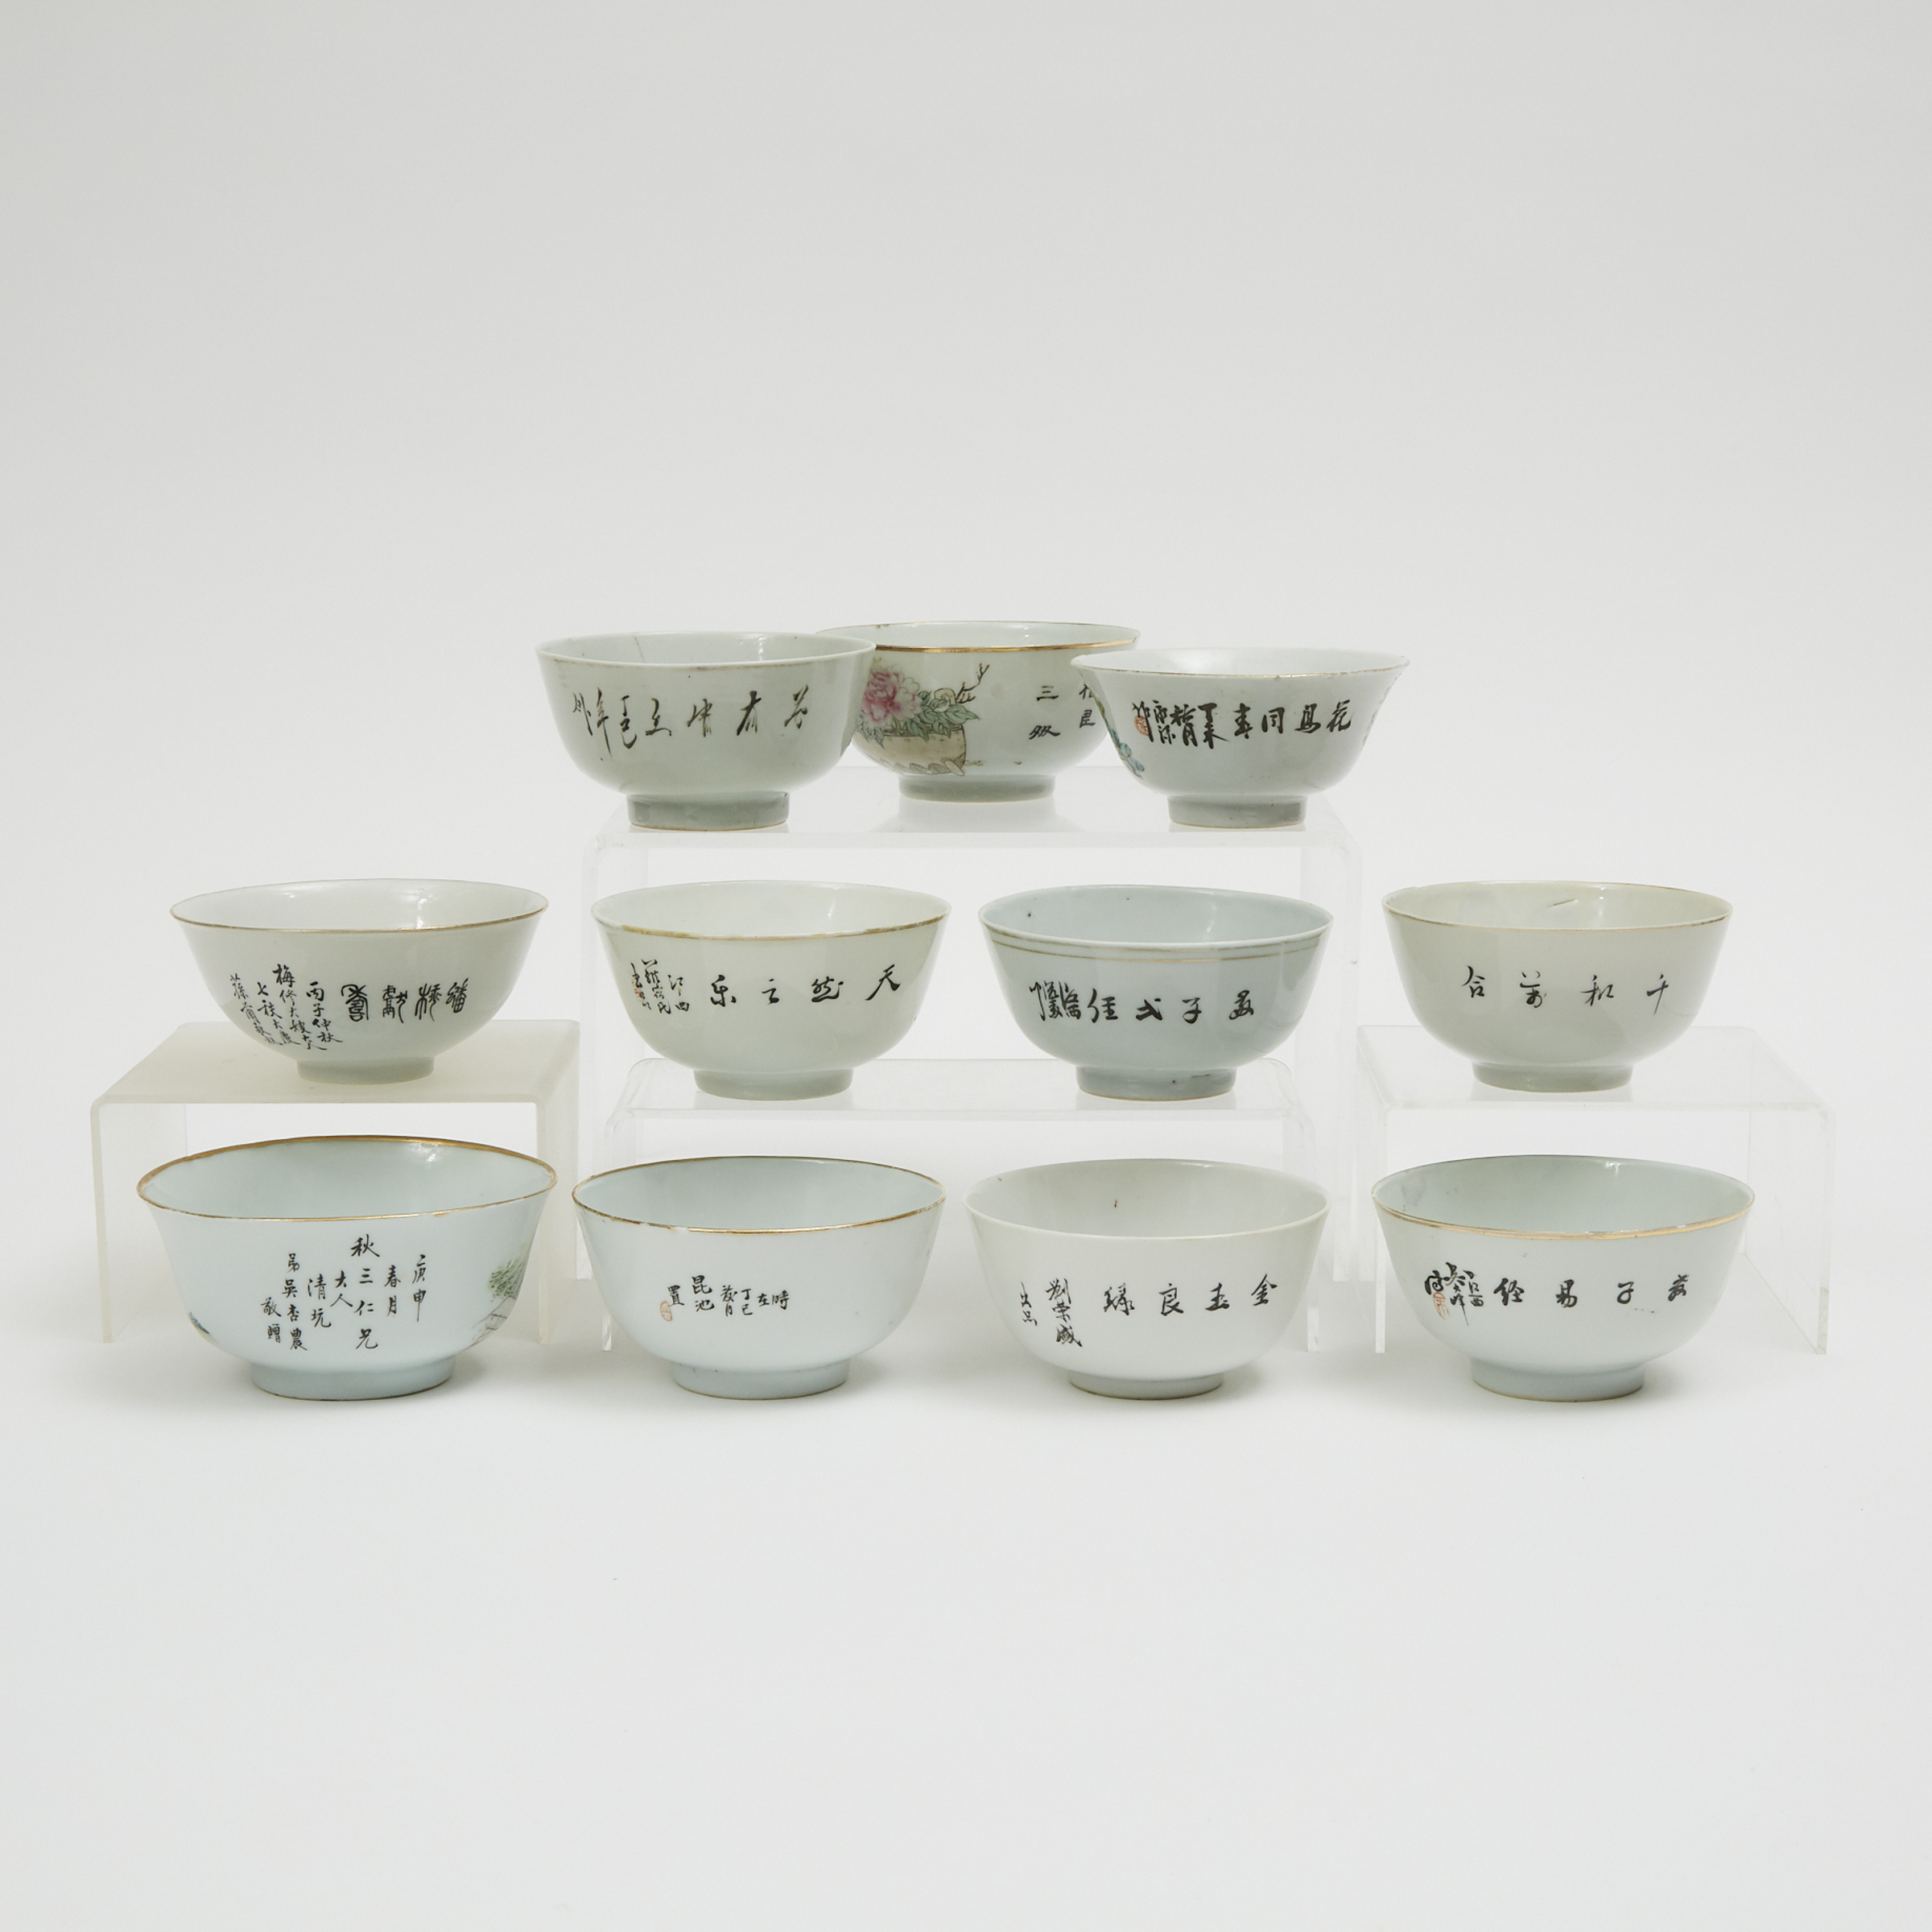 A Group of Eleven Porcelain Bowls, Republican Period